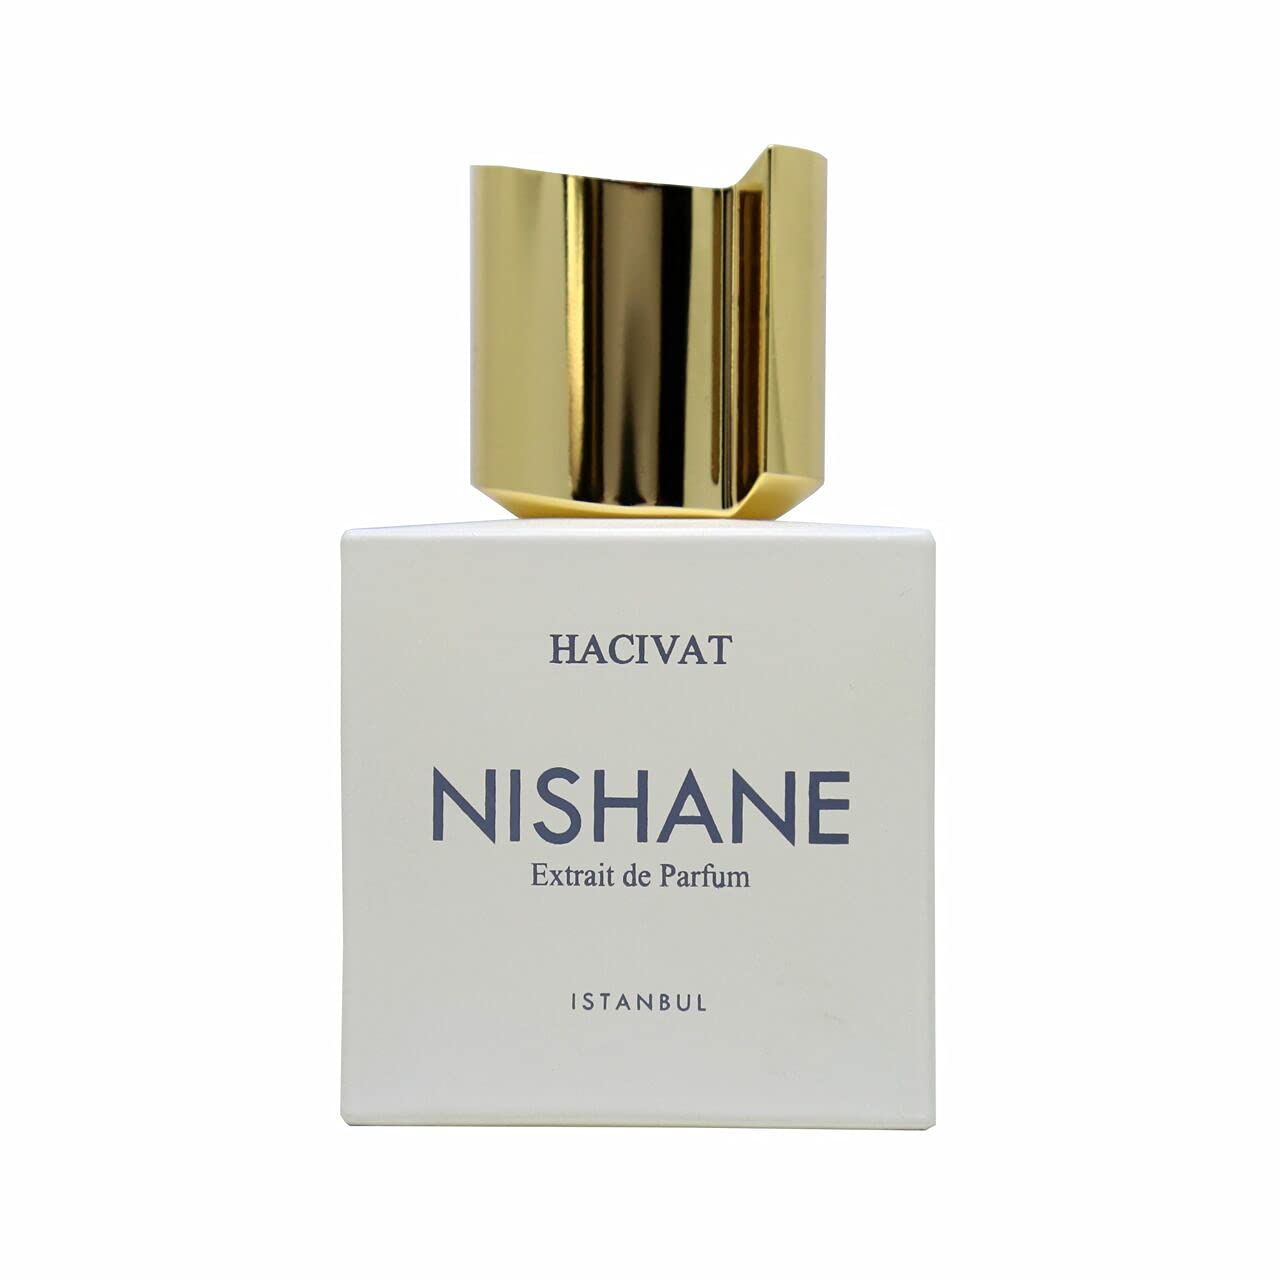 Nishane Hacivat X For Men And Women Extrait De Parfum 50Ml